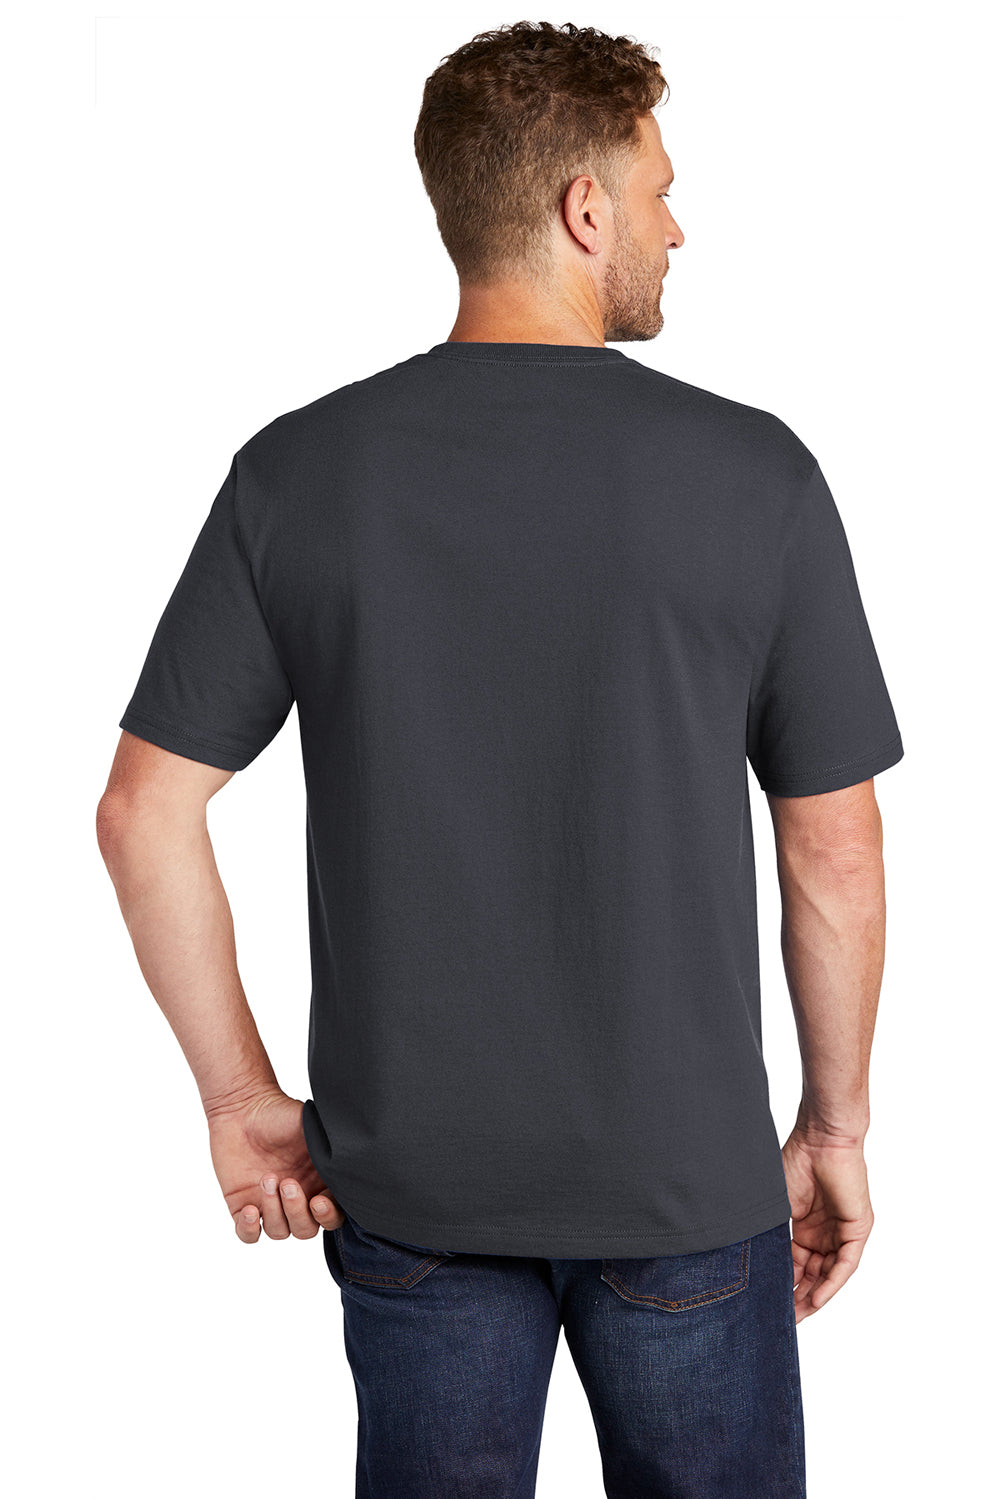 CornerStone Mens Short Sleeve Crewneck T-Shirt w/ Pocket Navy Blue Side